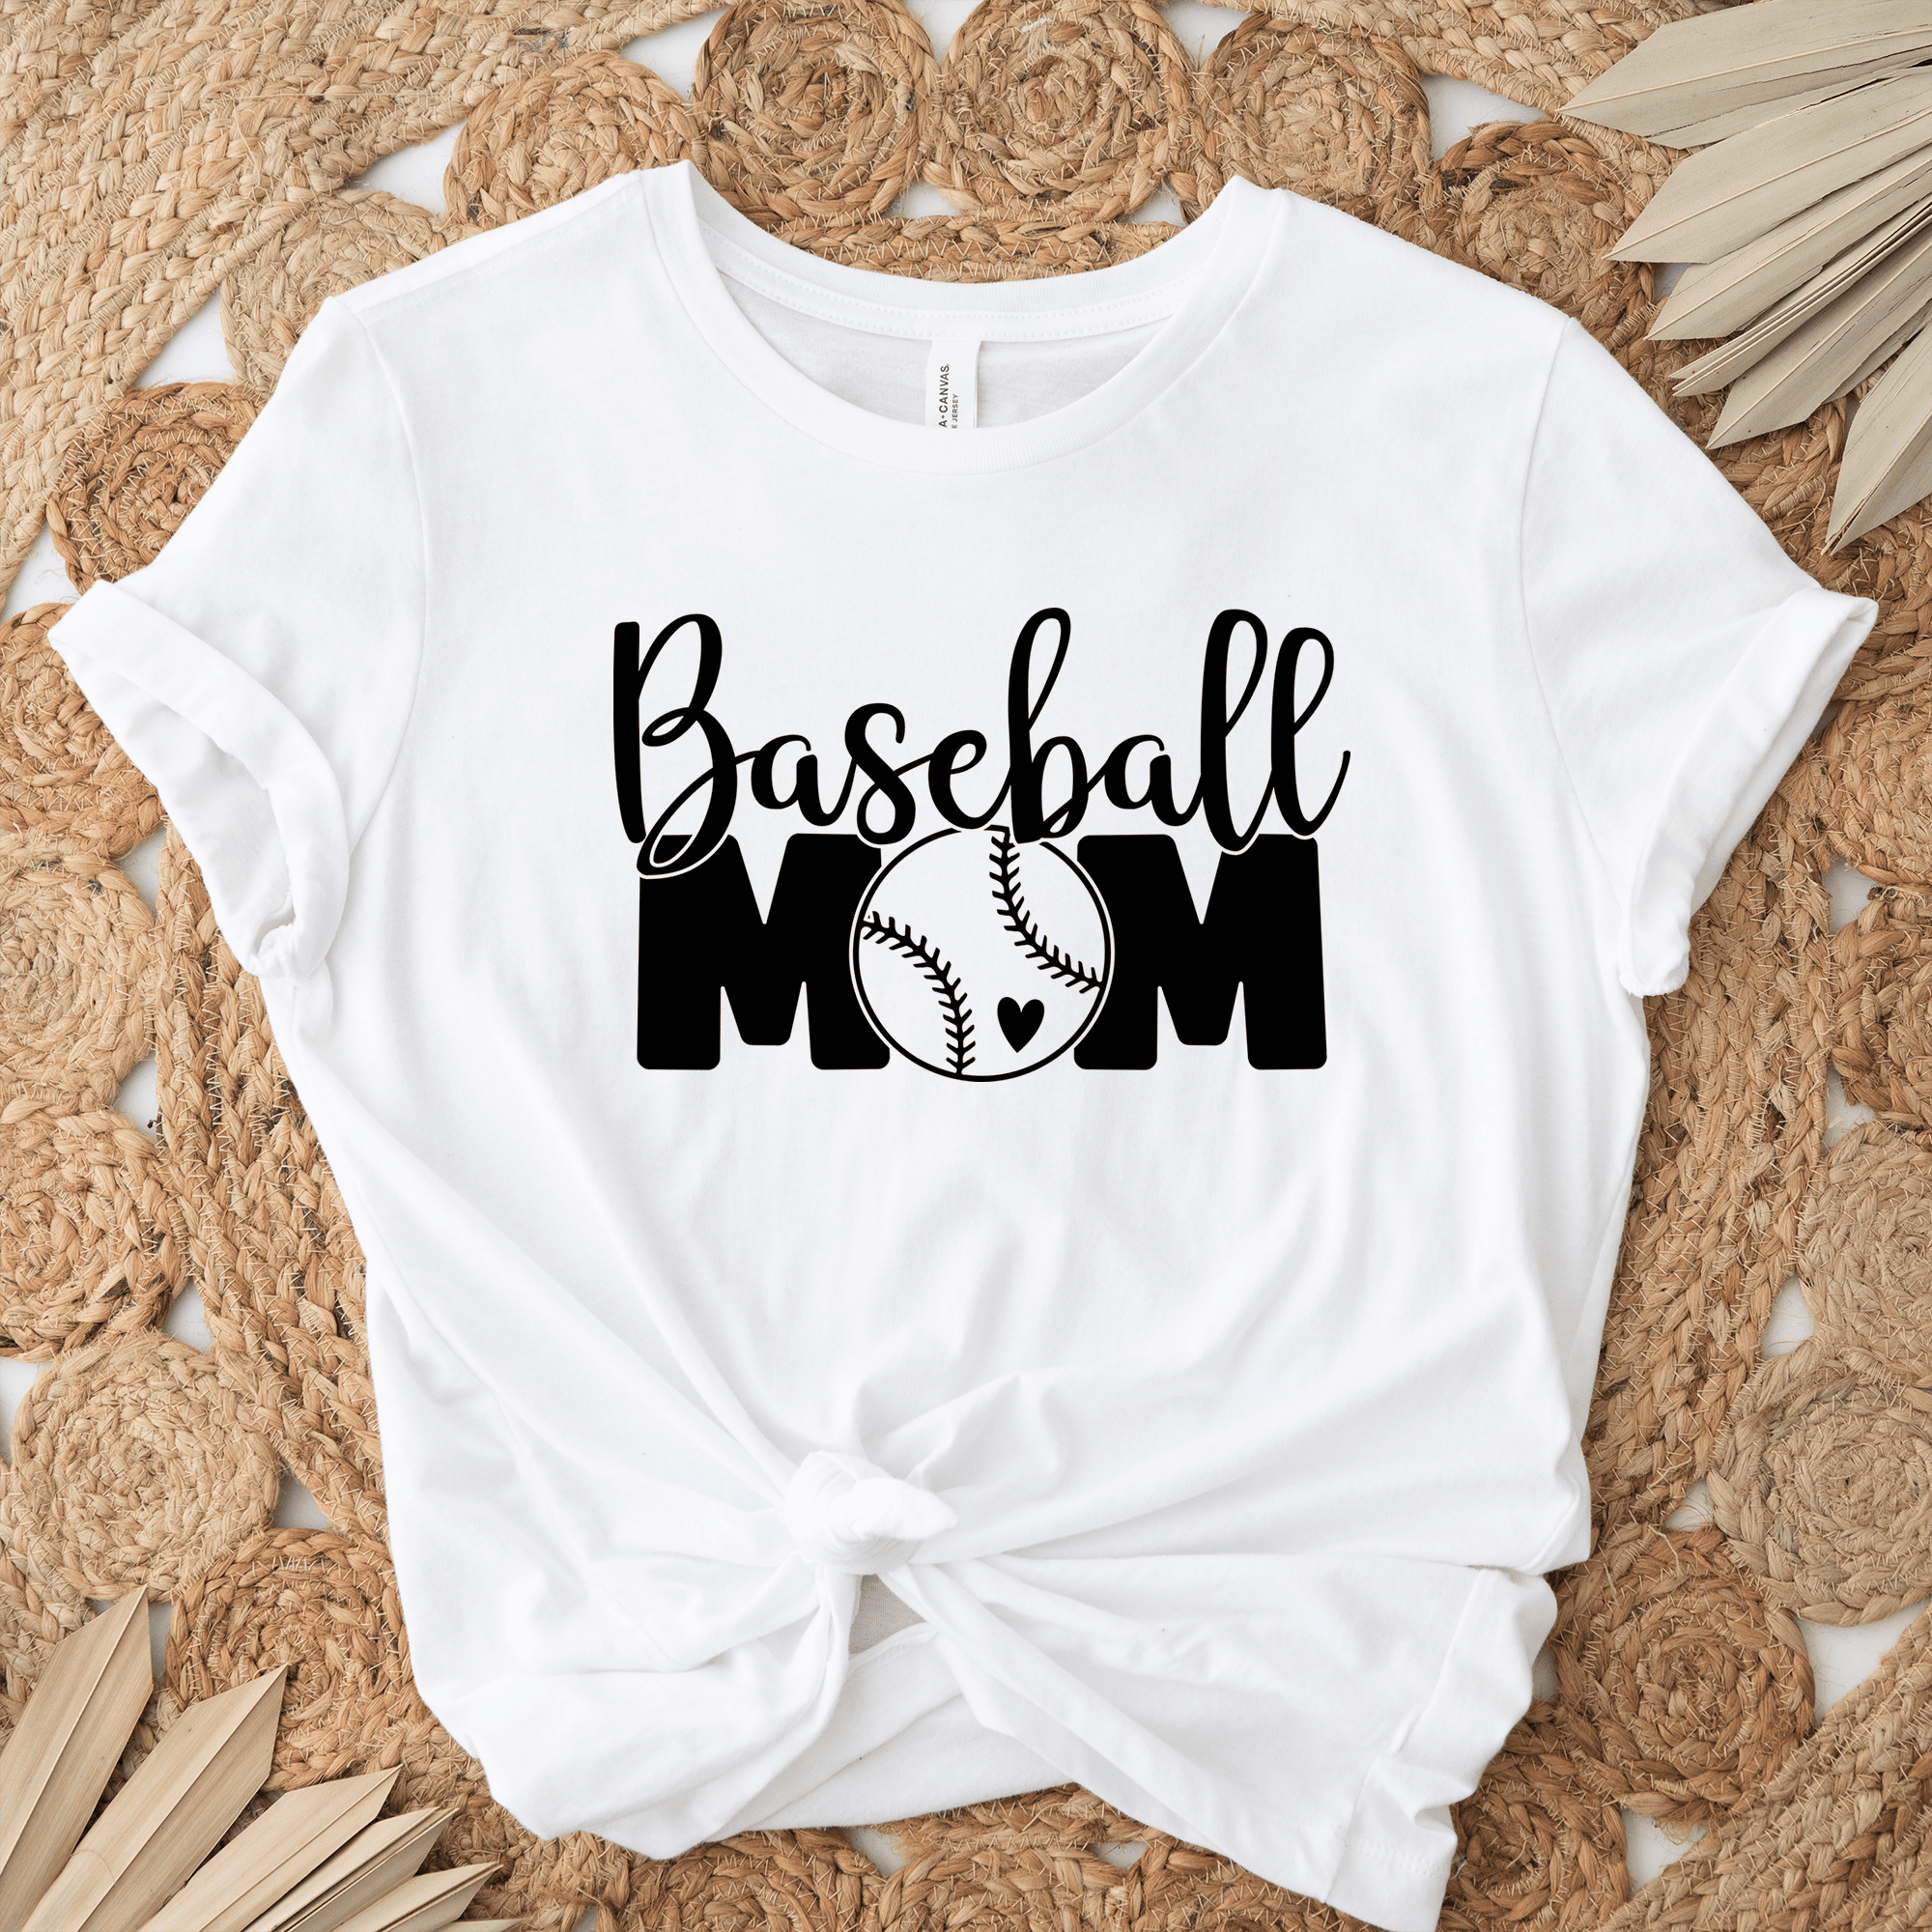 Womens White T Shirt with Proud-Baseball-Mom design